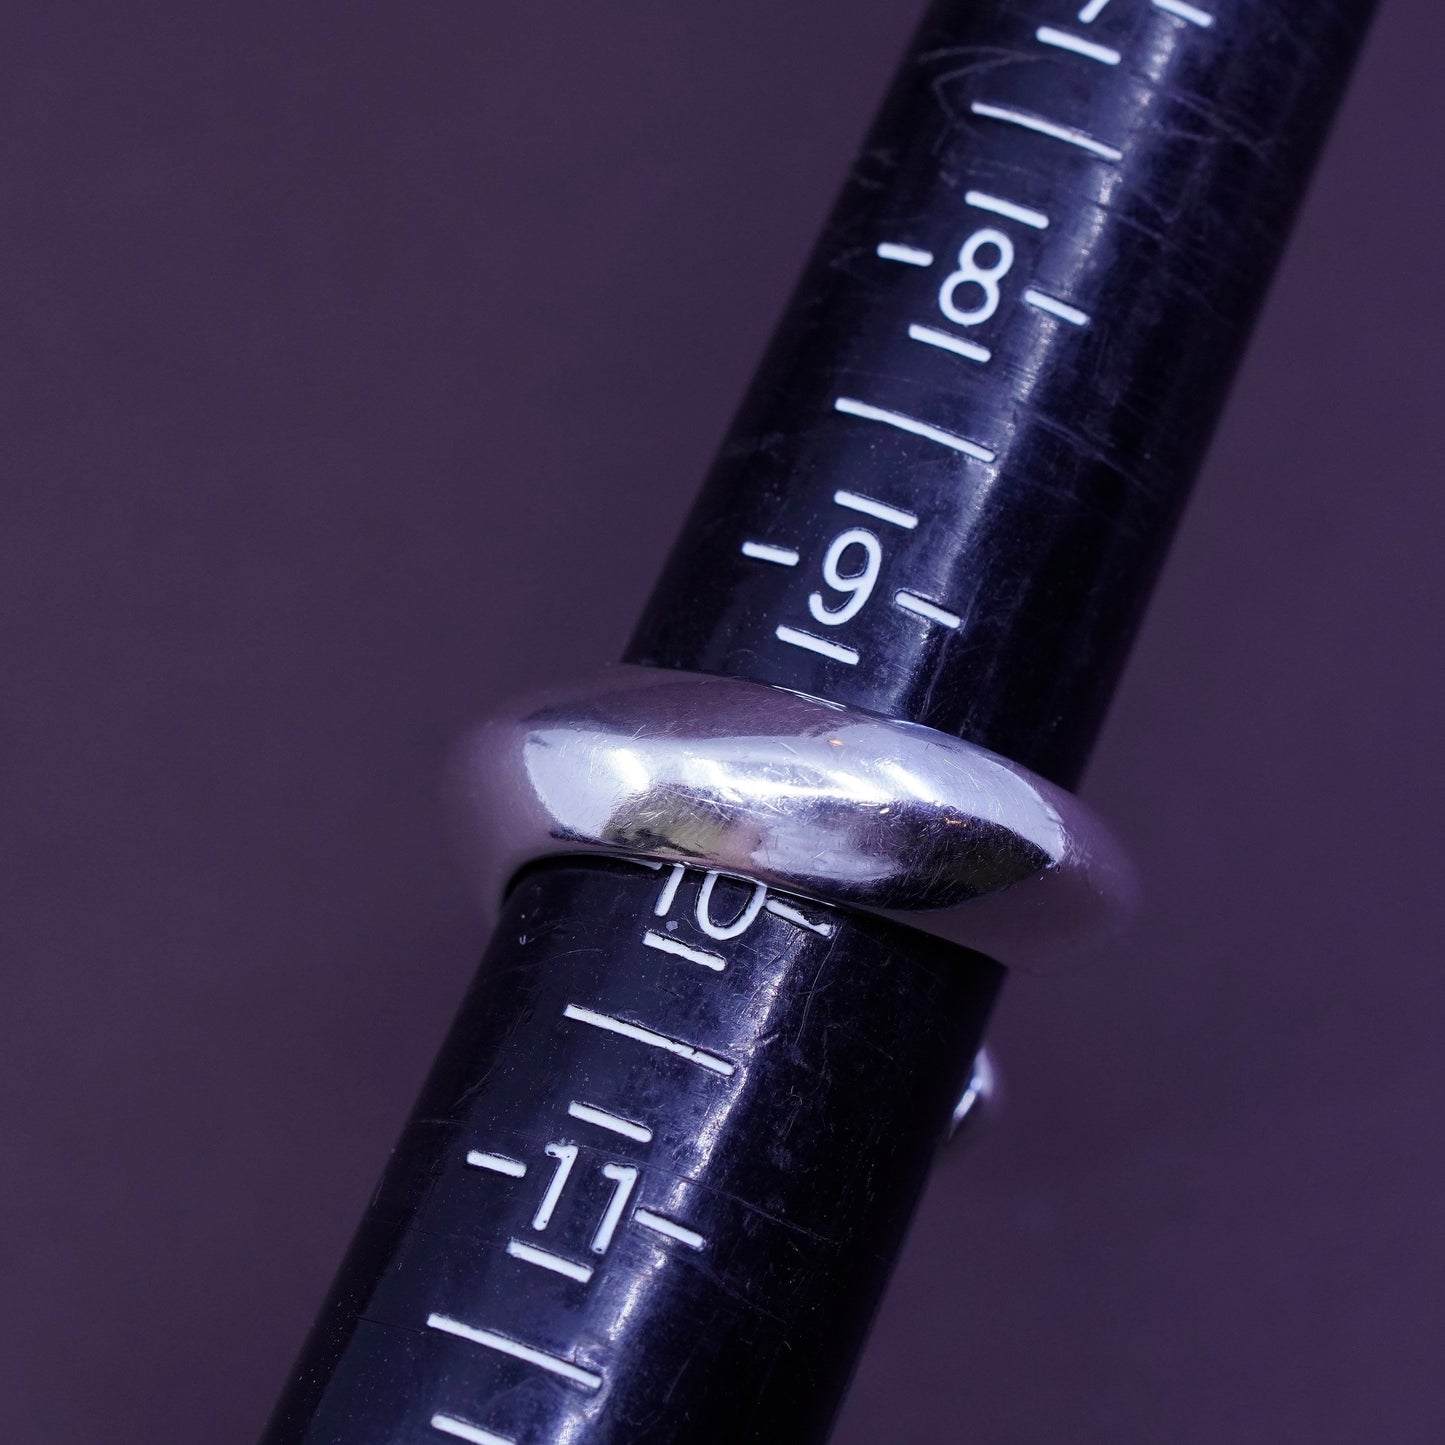 Size 9.5, Robert Lee Morris Studio Sterling silver handmade ring, wrap 925 band